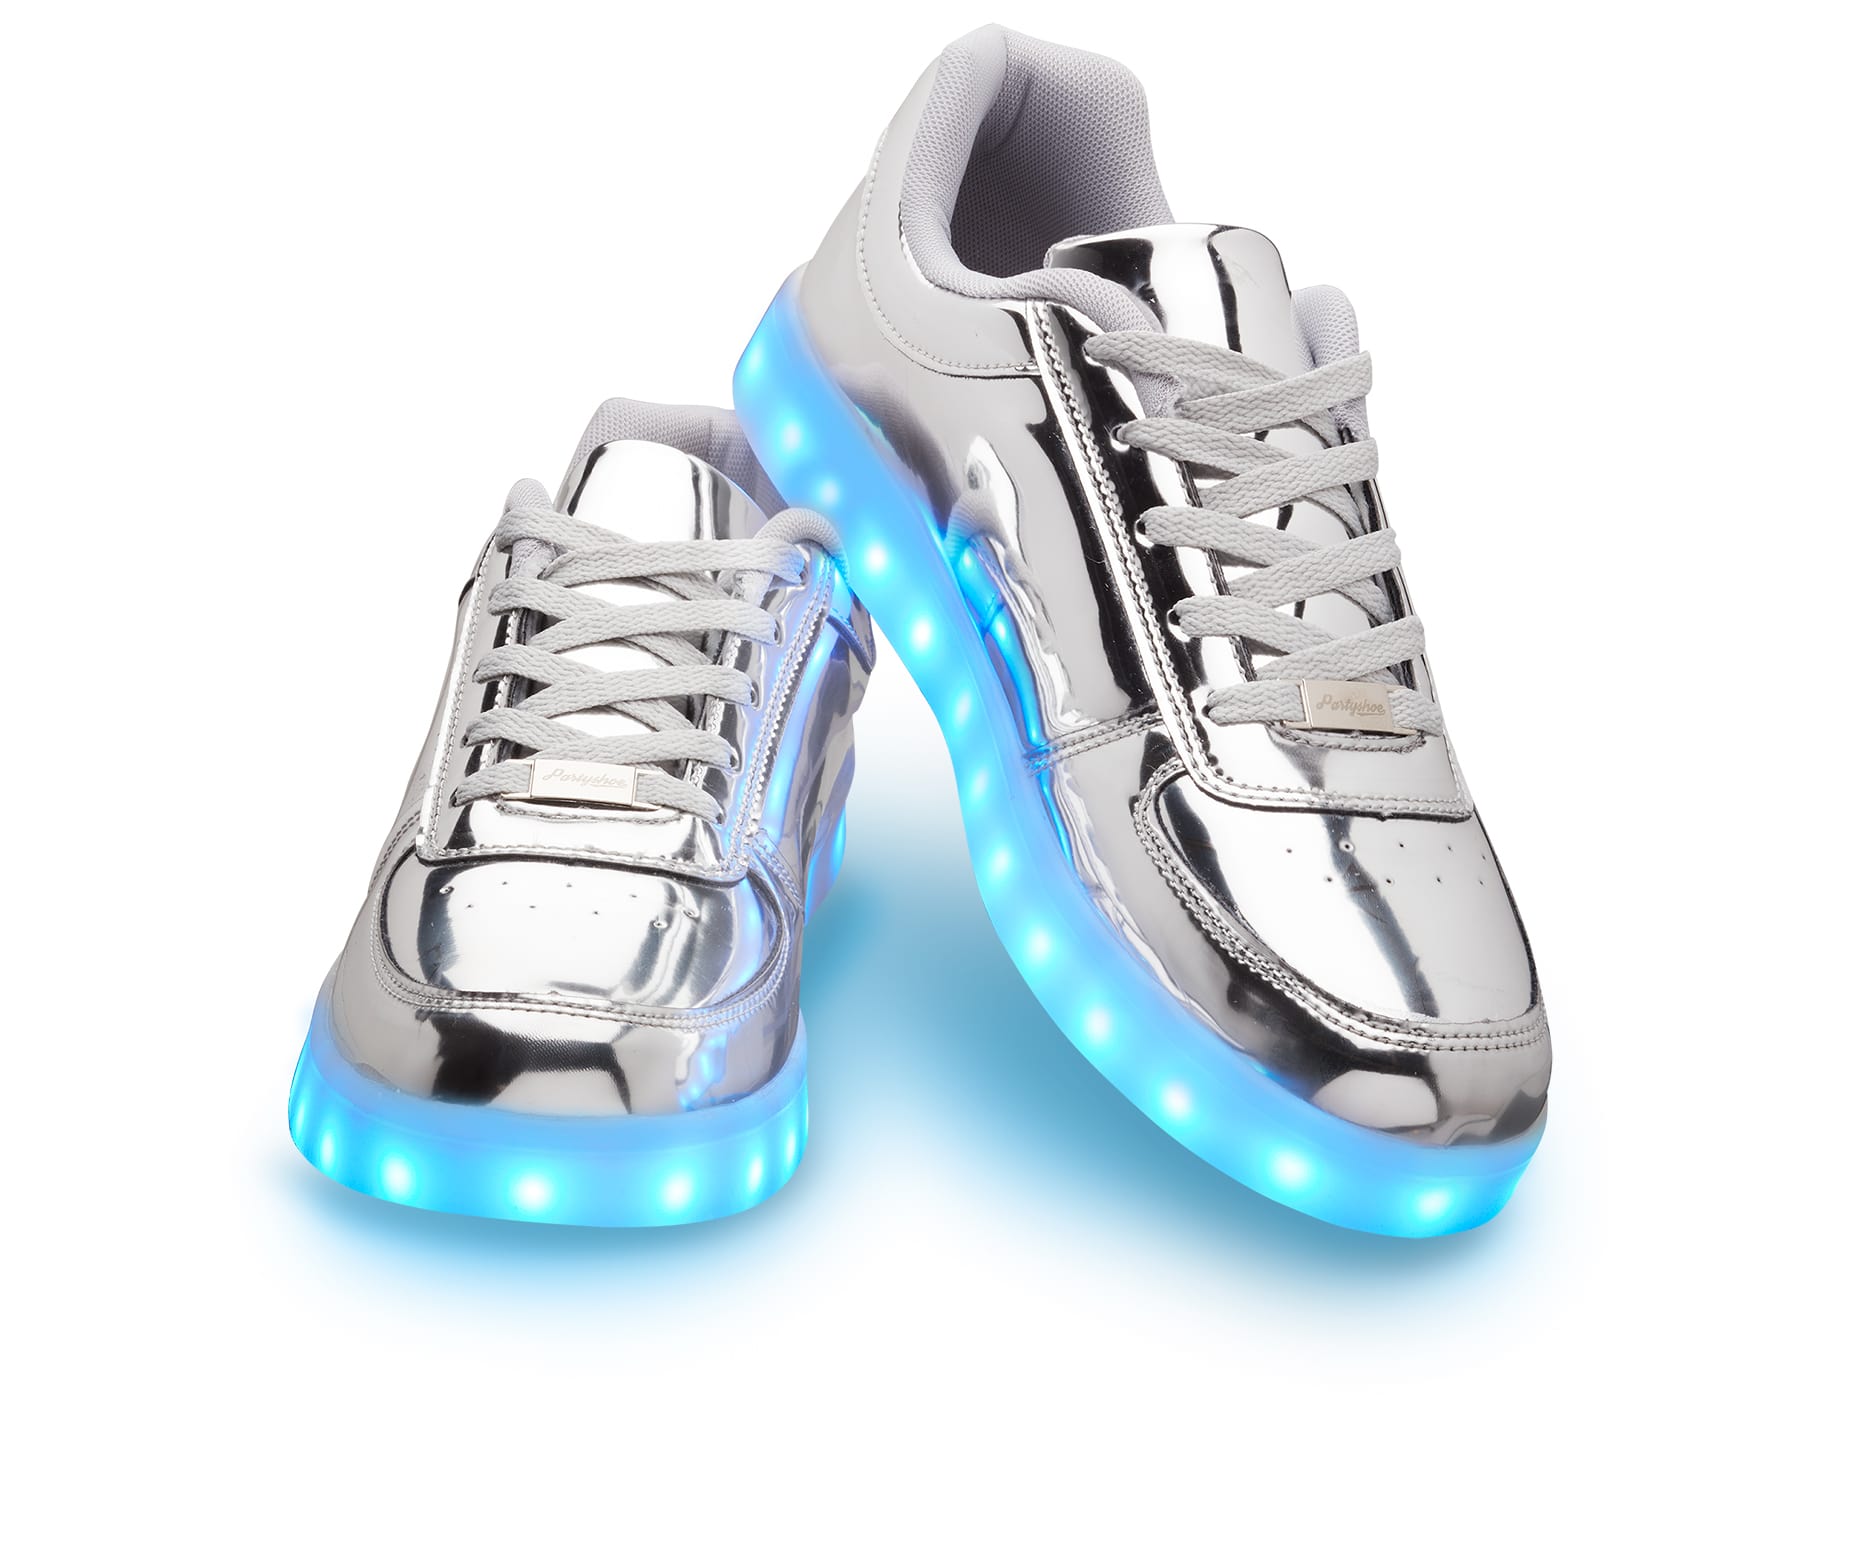 Ledschoenen met lichtjes - Zilver Limited Edition